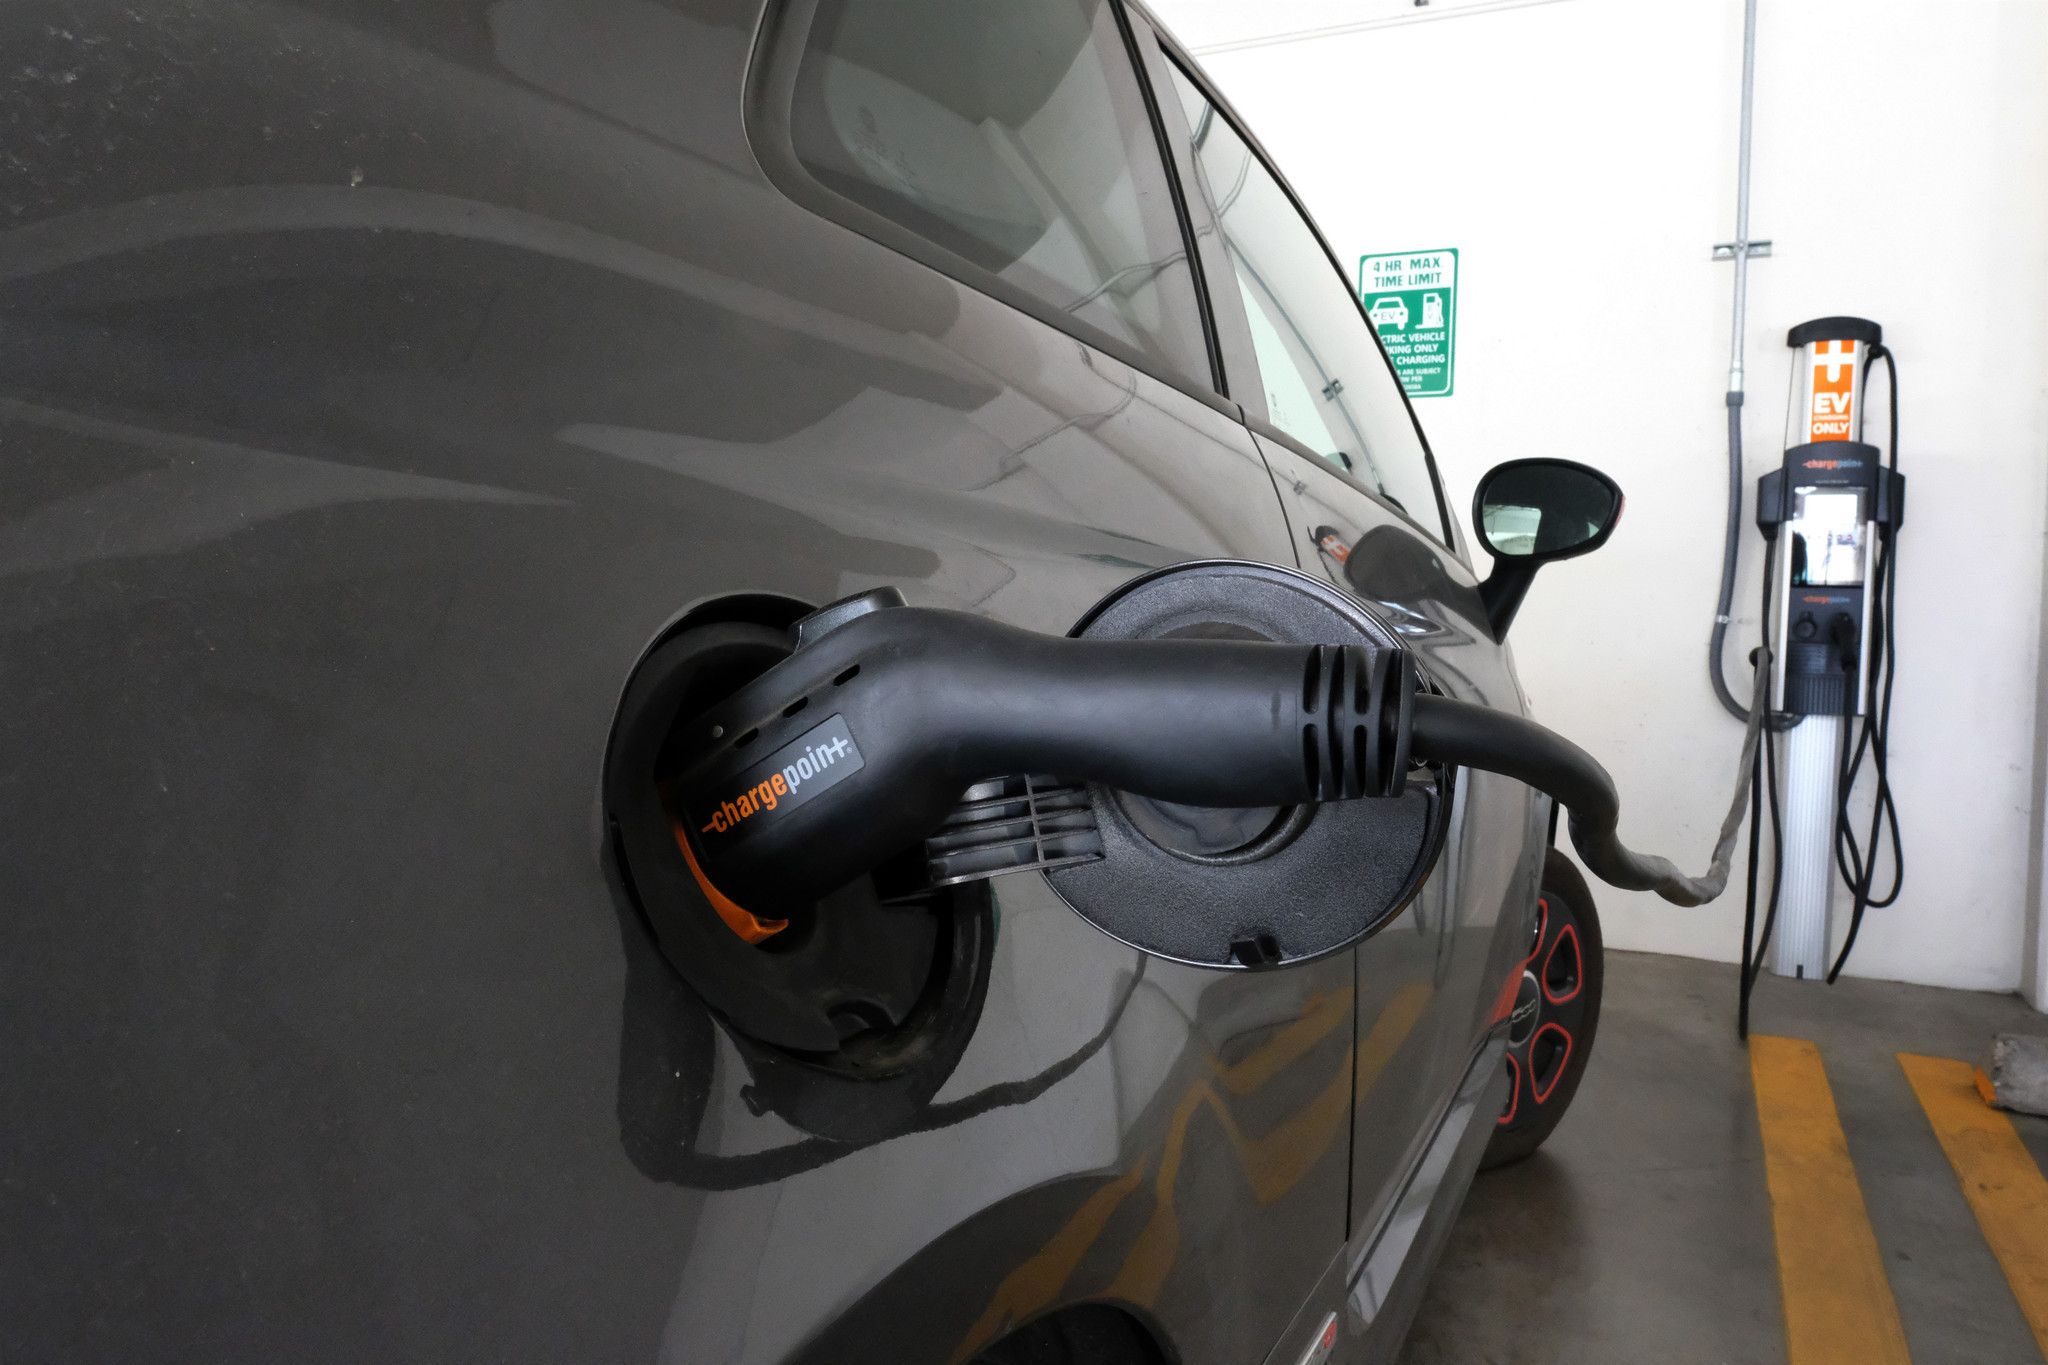 Electric car charging stations spark talk in Hobart - Post-Tribune